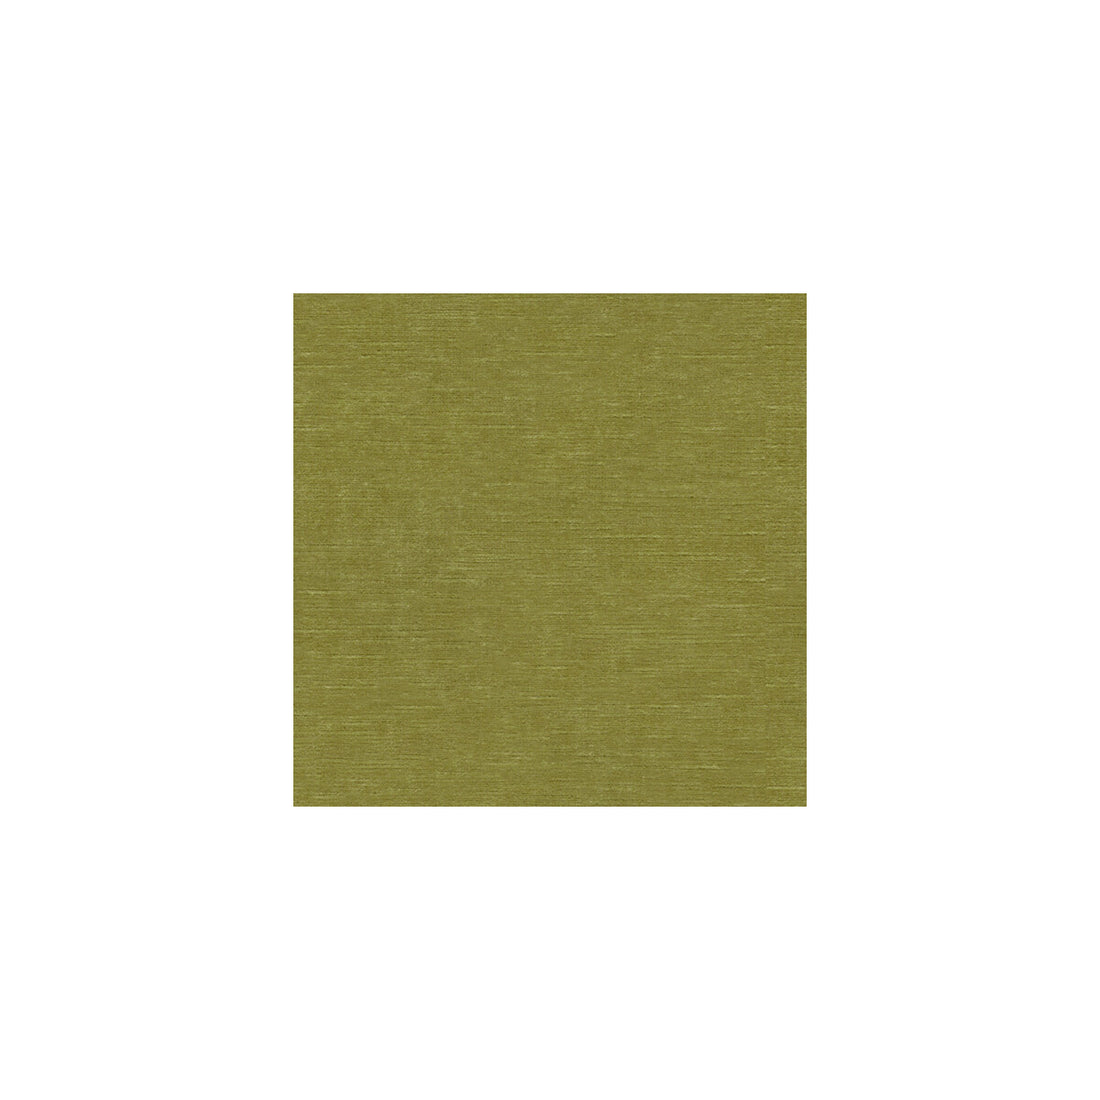 Venetian fabric in moss color - pattern 31326.3.0 - by Kravet Design